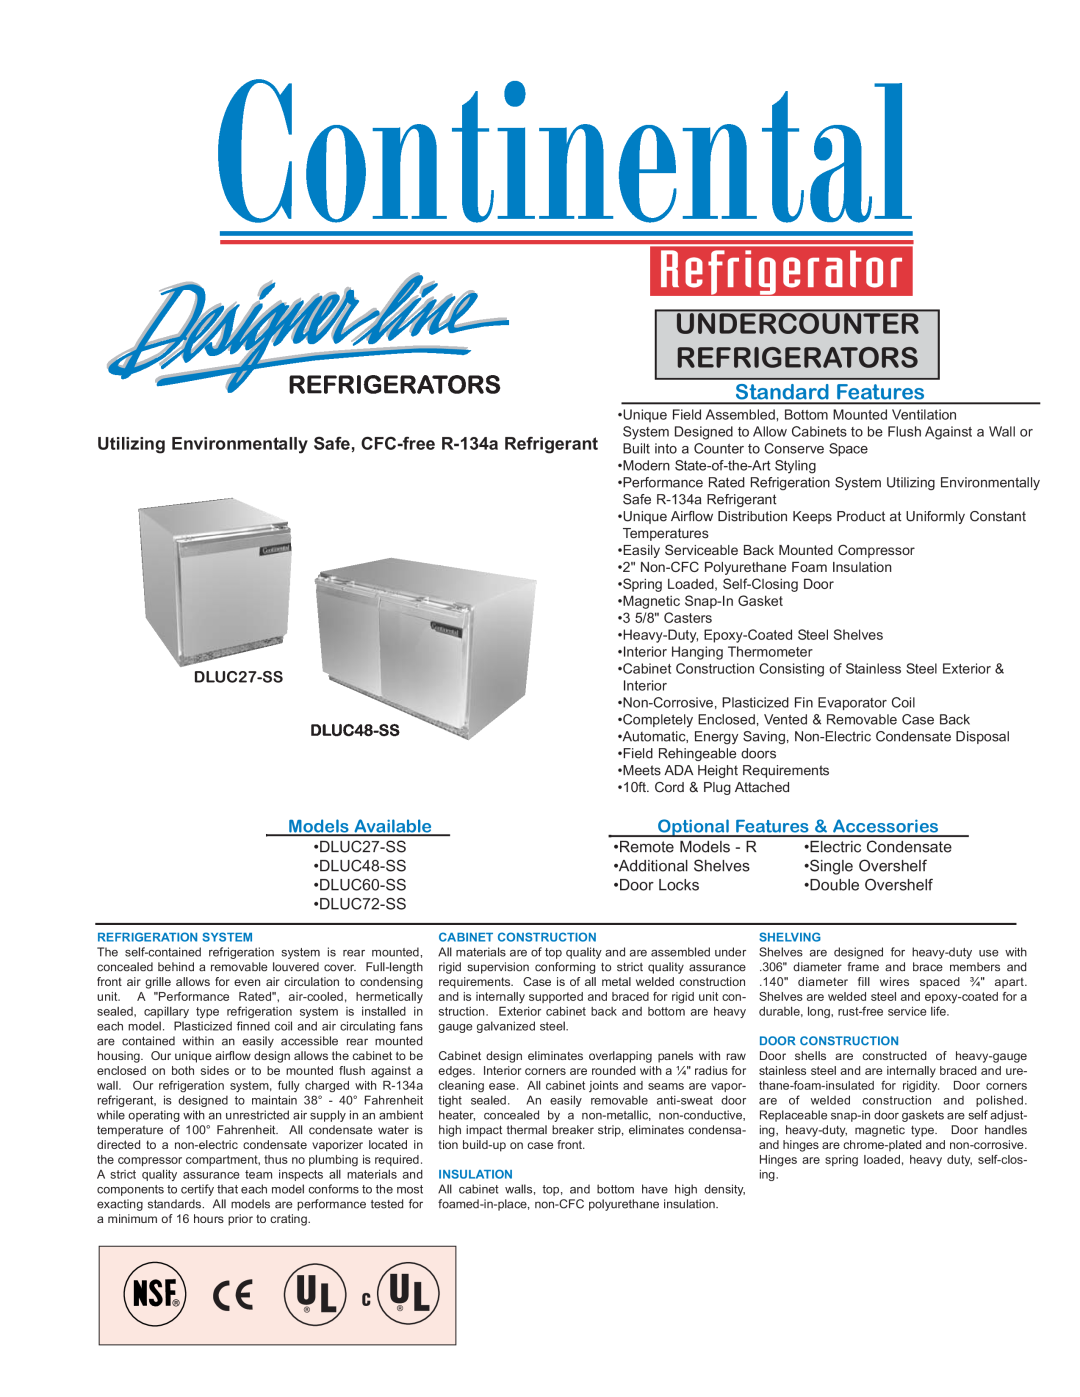 Continental Refrigerator DLUC72-SS manual Undercounter Refrigerators, Standard Features, Models Available, Door Locks 